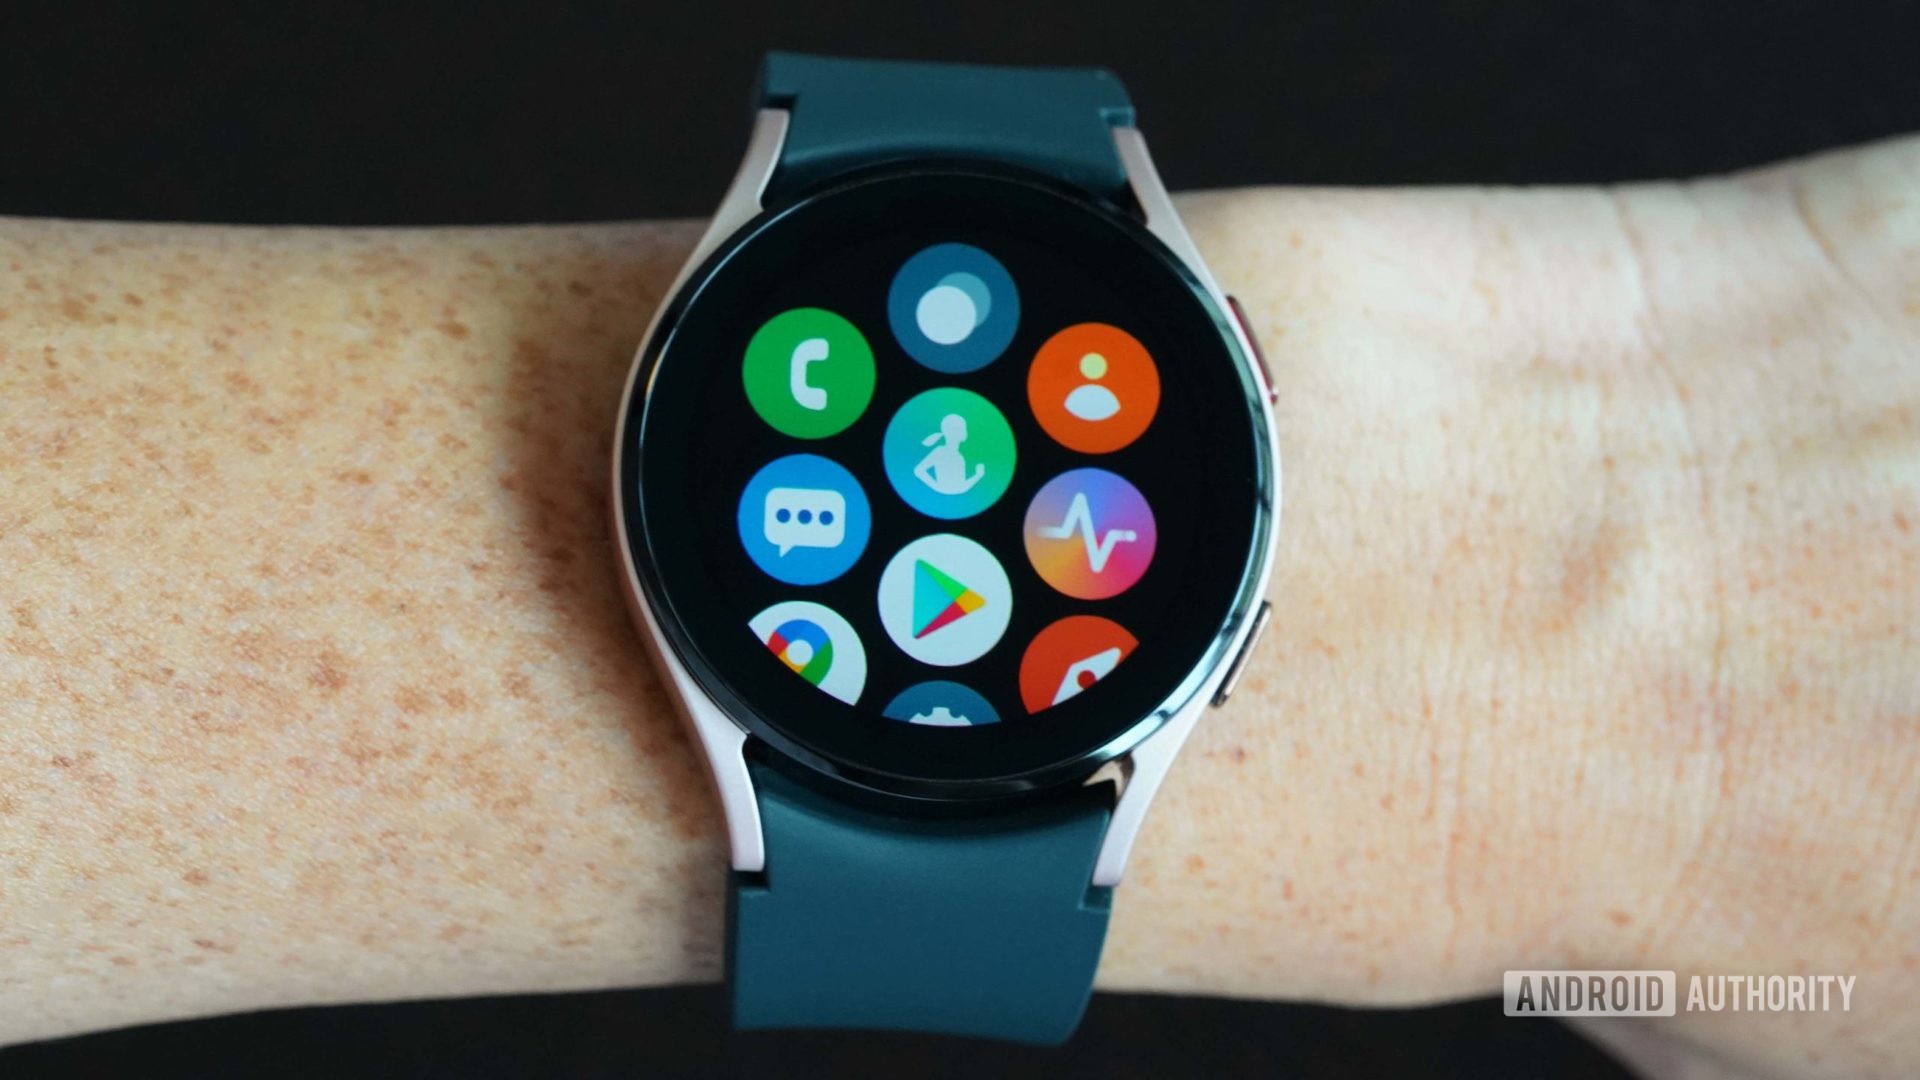 Samsung Galaxy Watch 4 displays app screen on a black background.